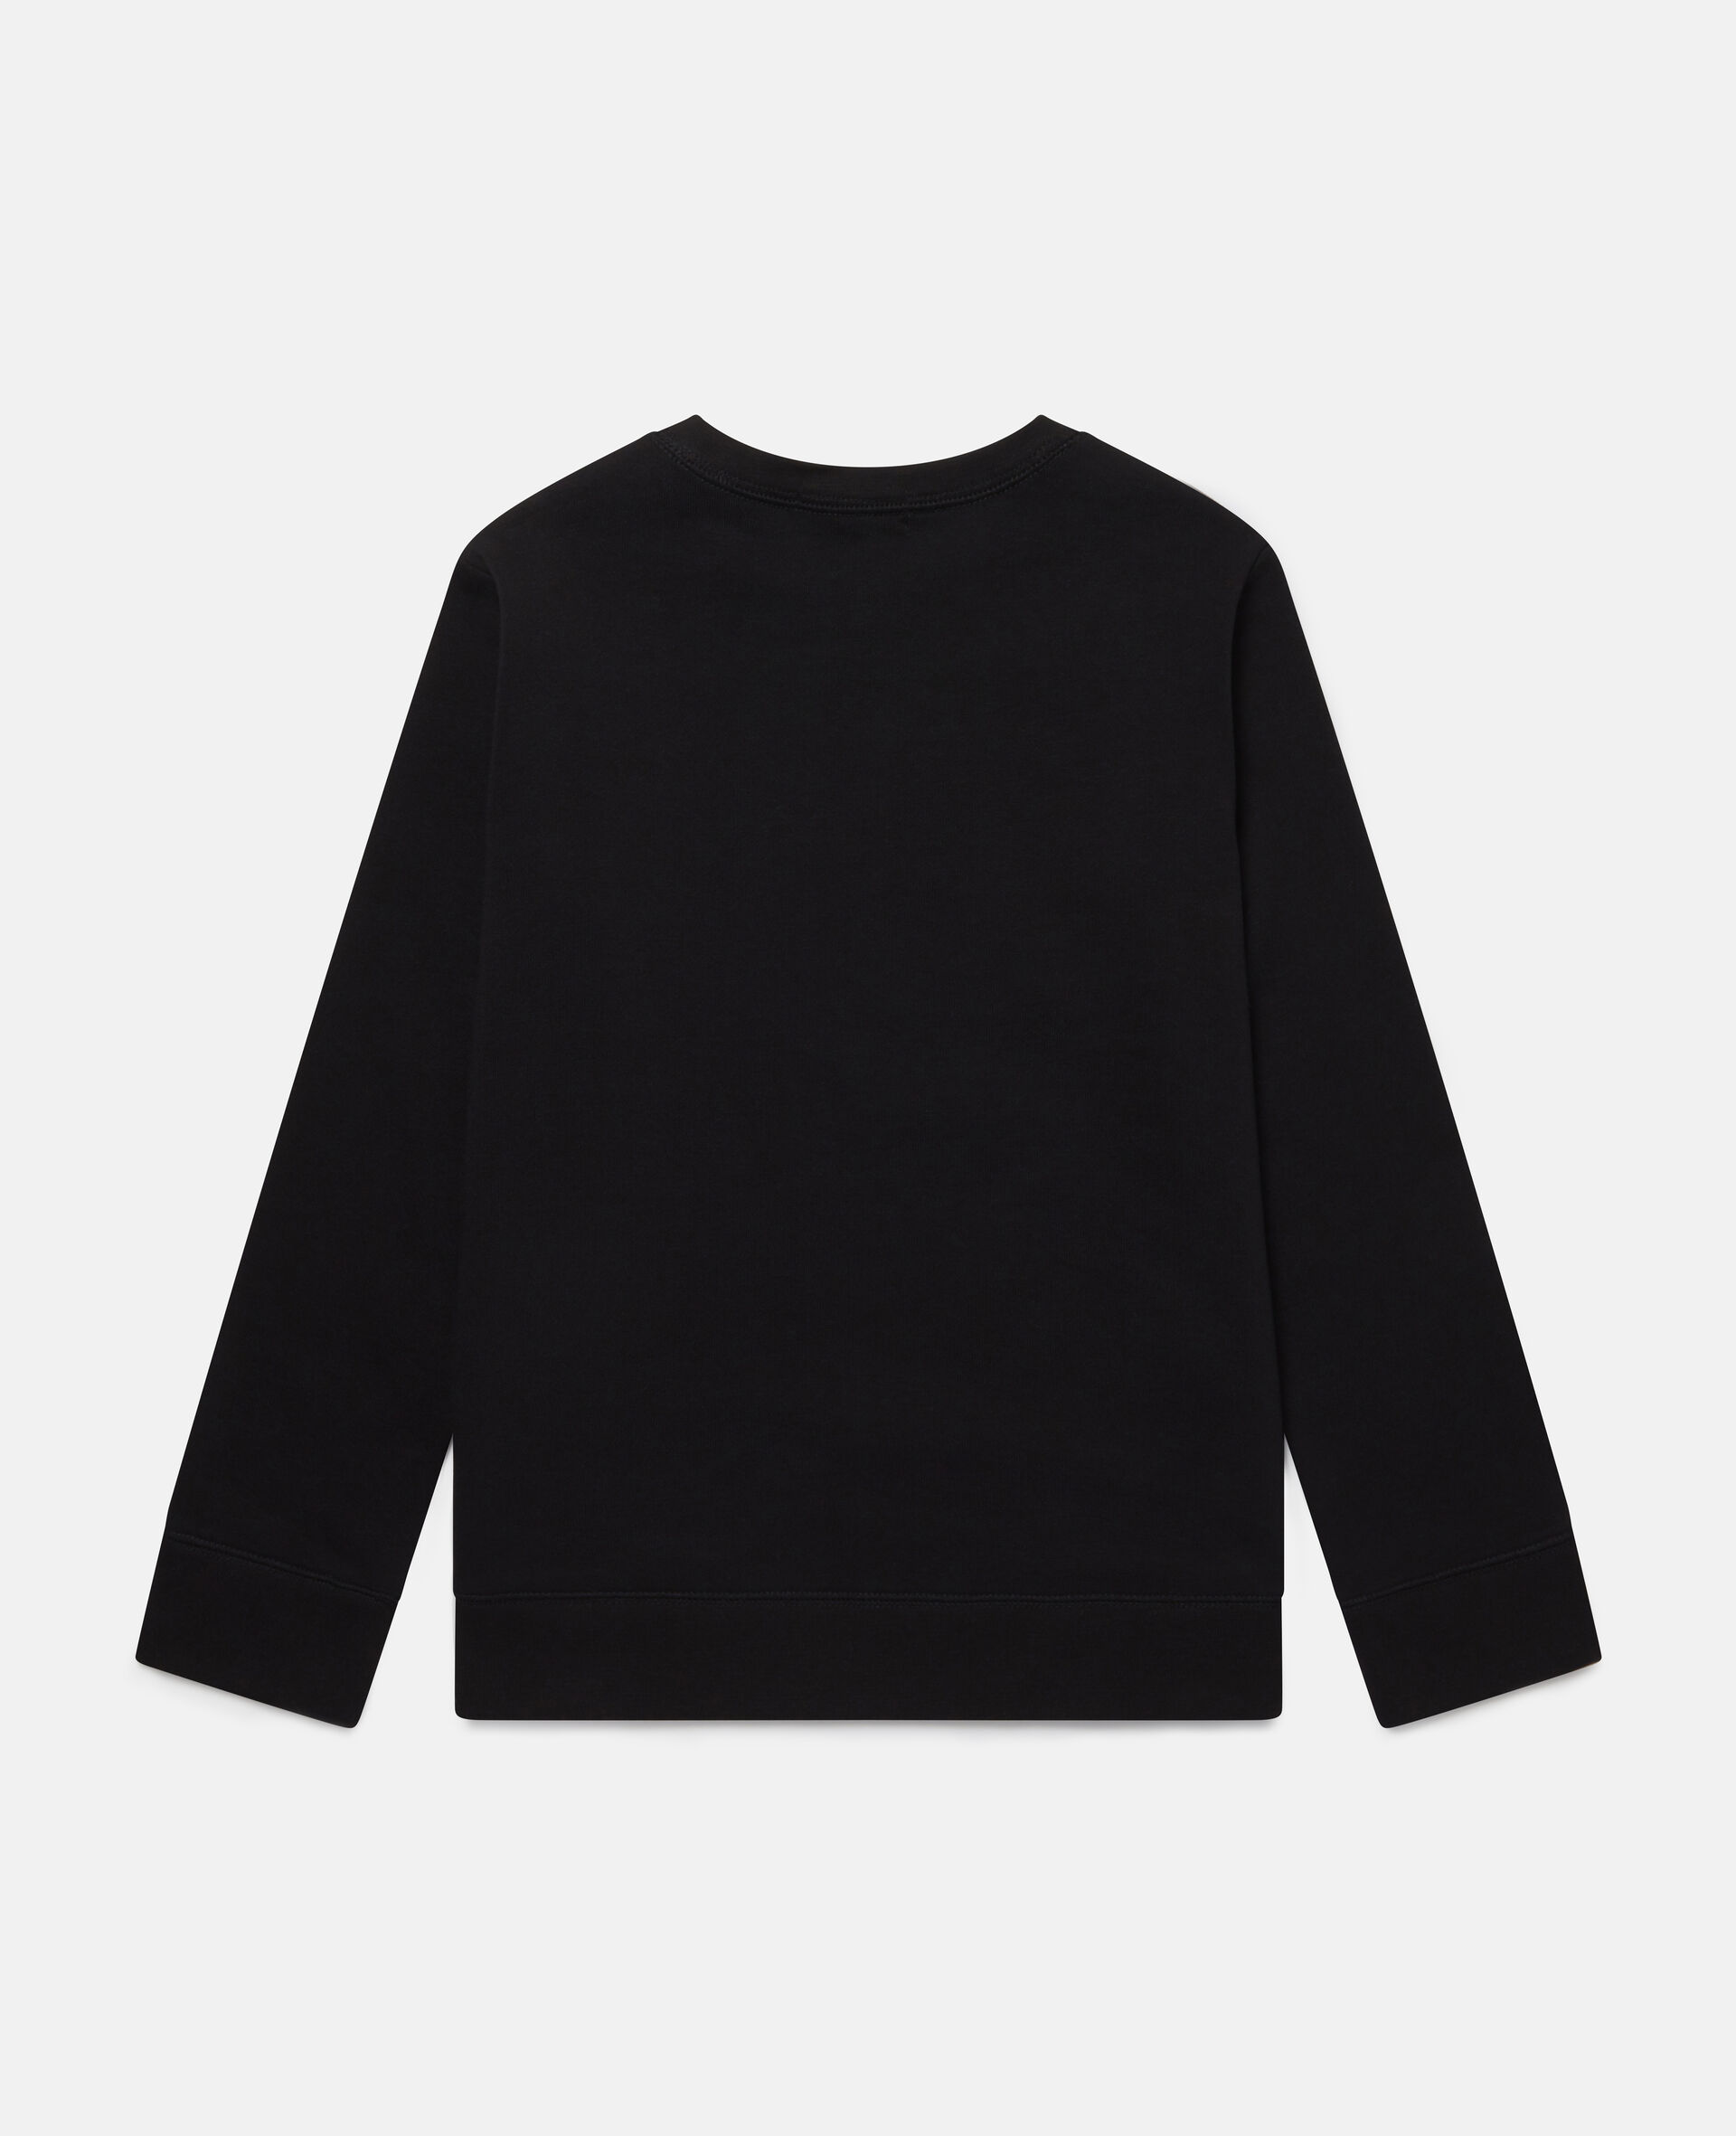 Fun Oversize Cotton Fleece Sweatshirt -Black-large image number 3